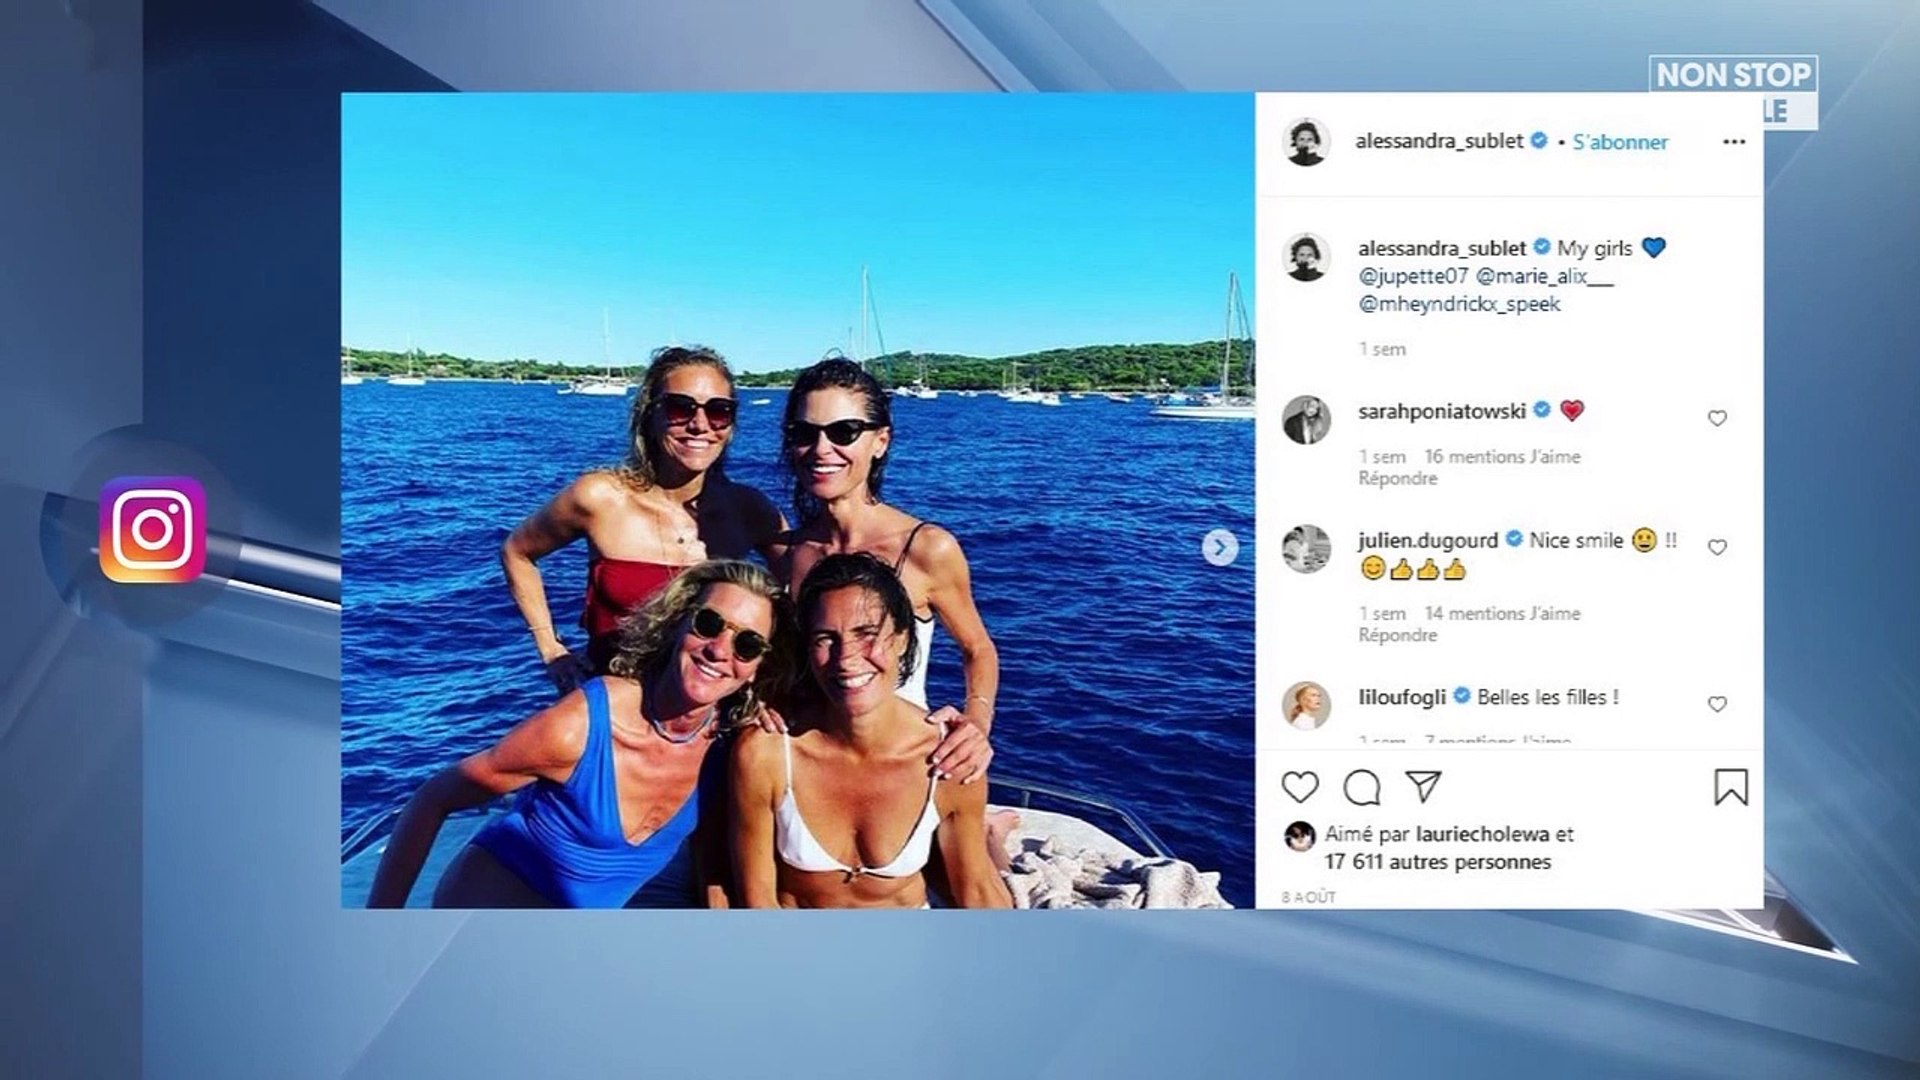 Alessandra Sublet : vacances sportives en Italie avec son chéri Jordan  Deguen - Vidéo Dailymotion